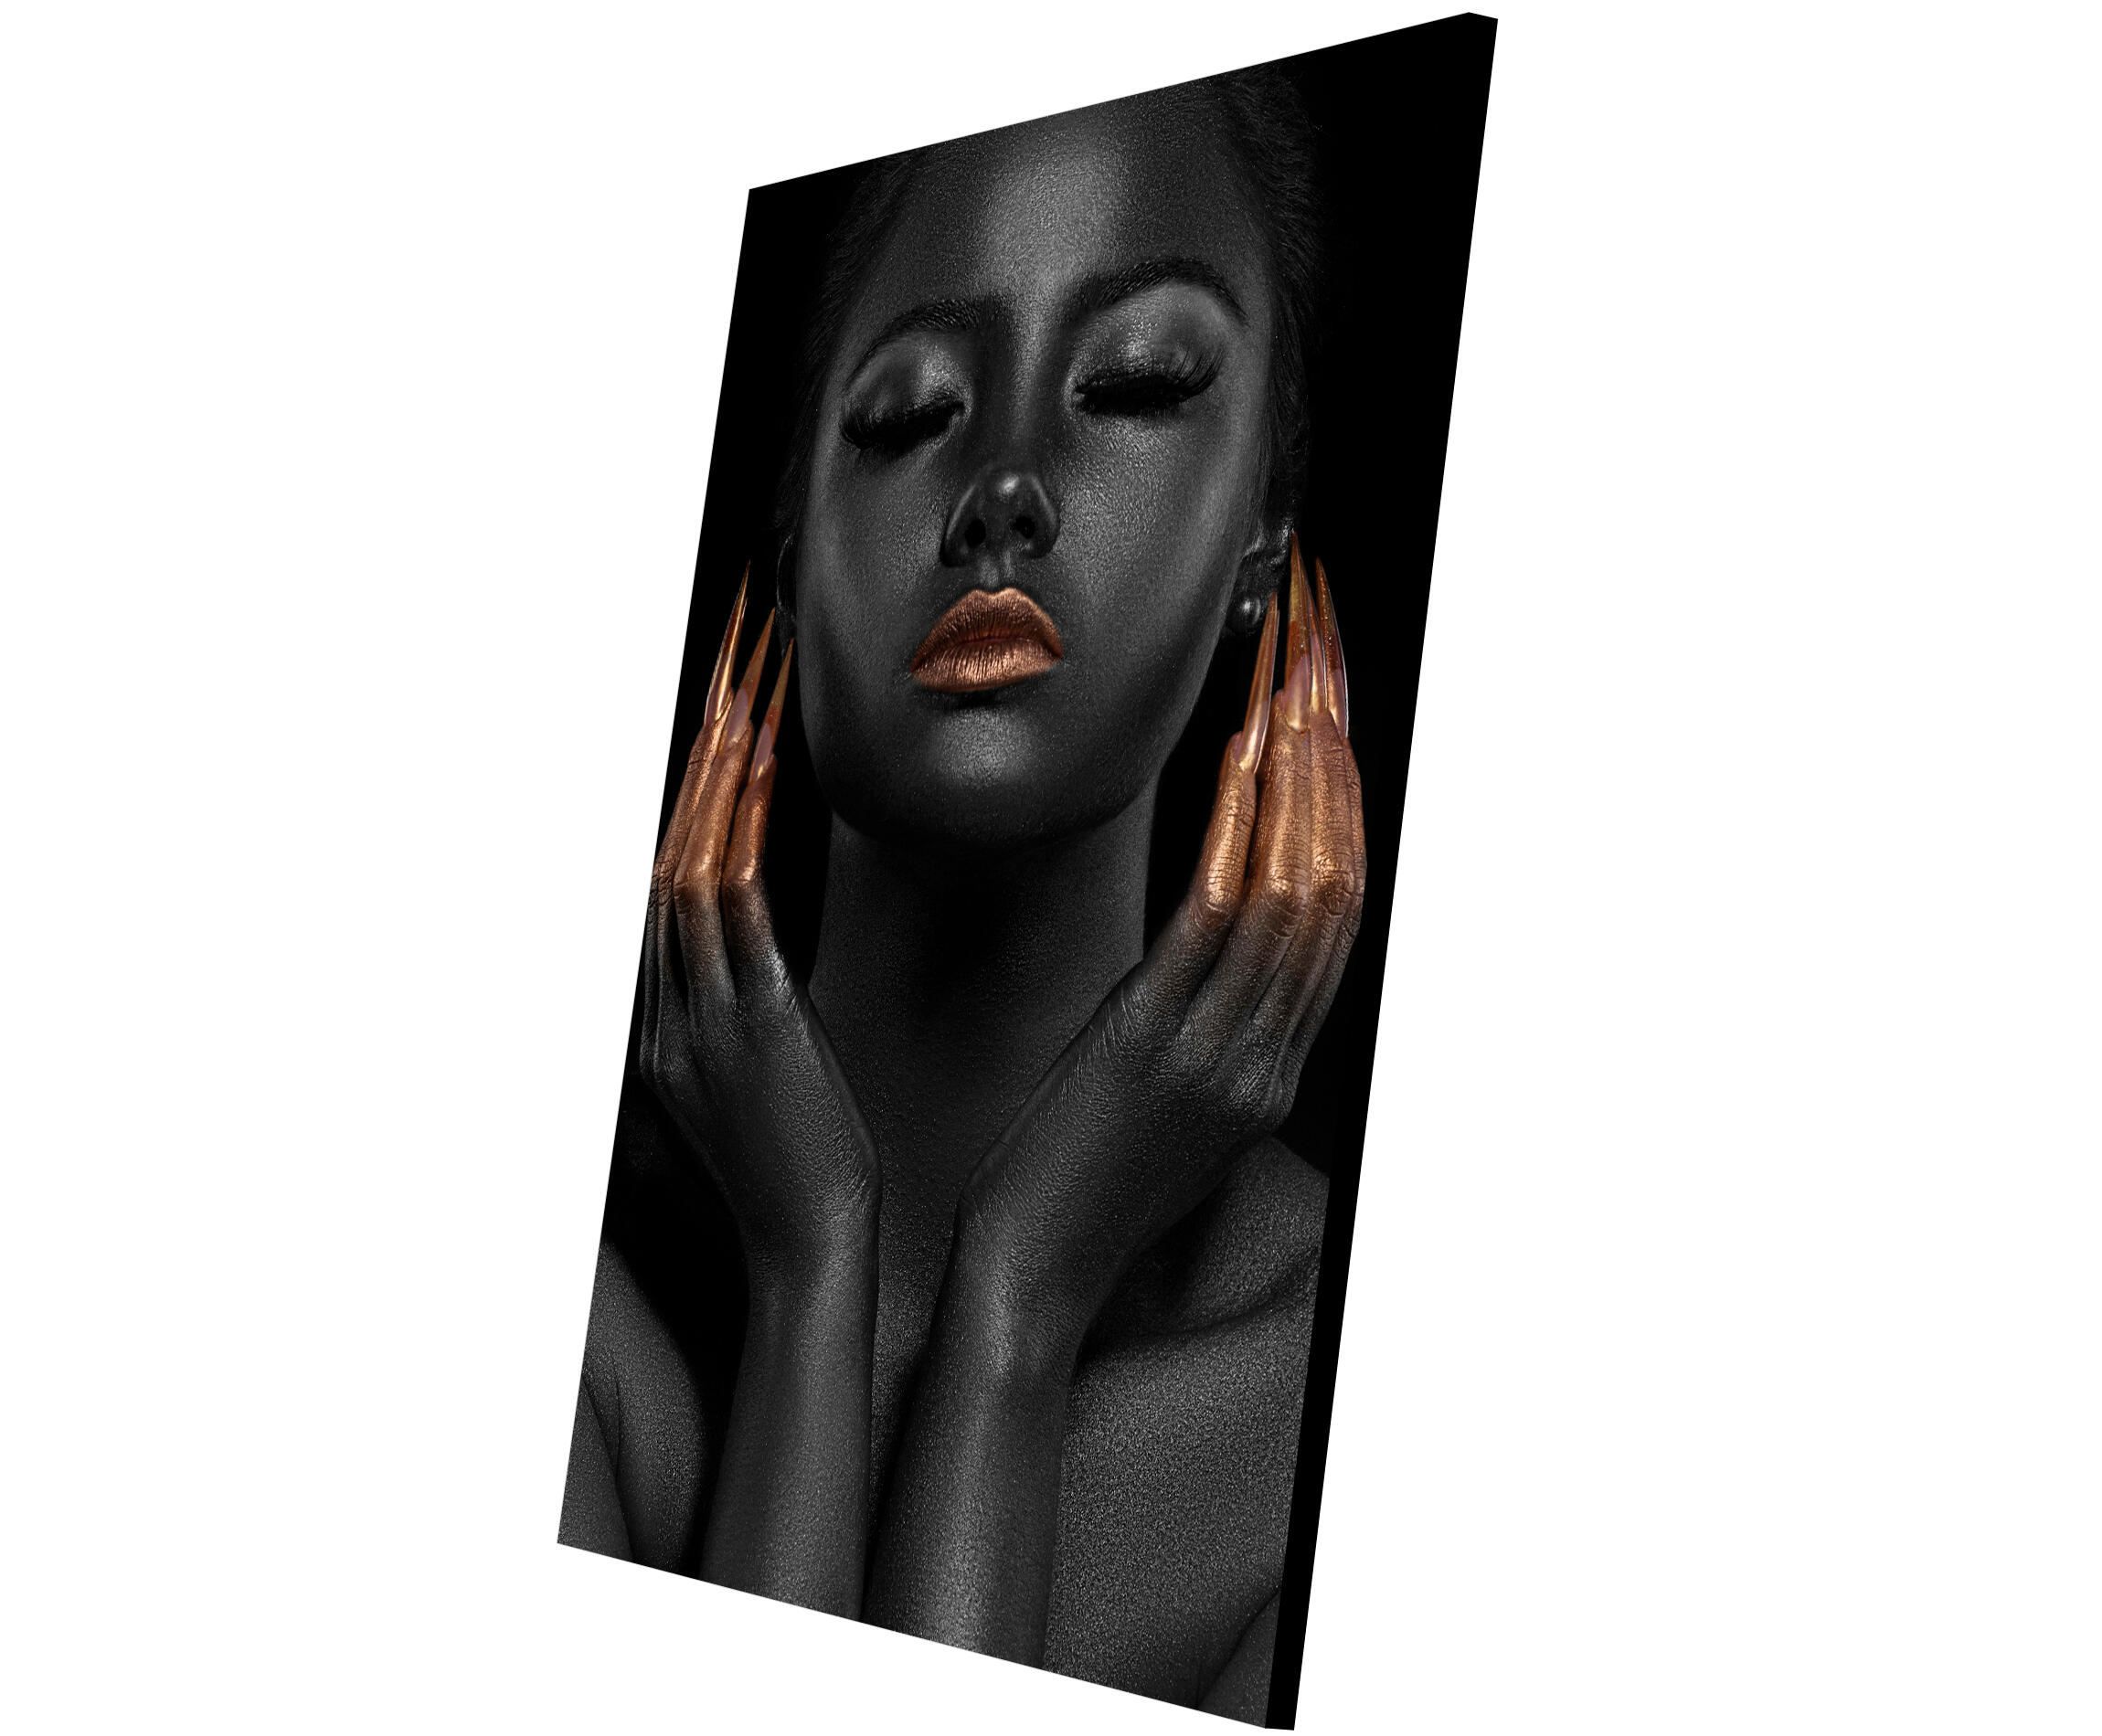 Cuadro sin marco plano alto brillo woman negro y oro 1 140 x 100 cm